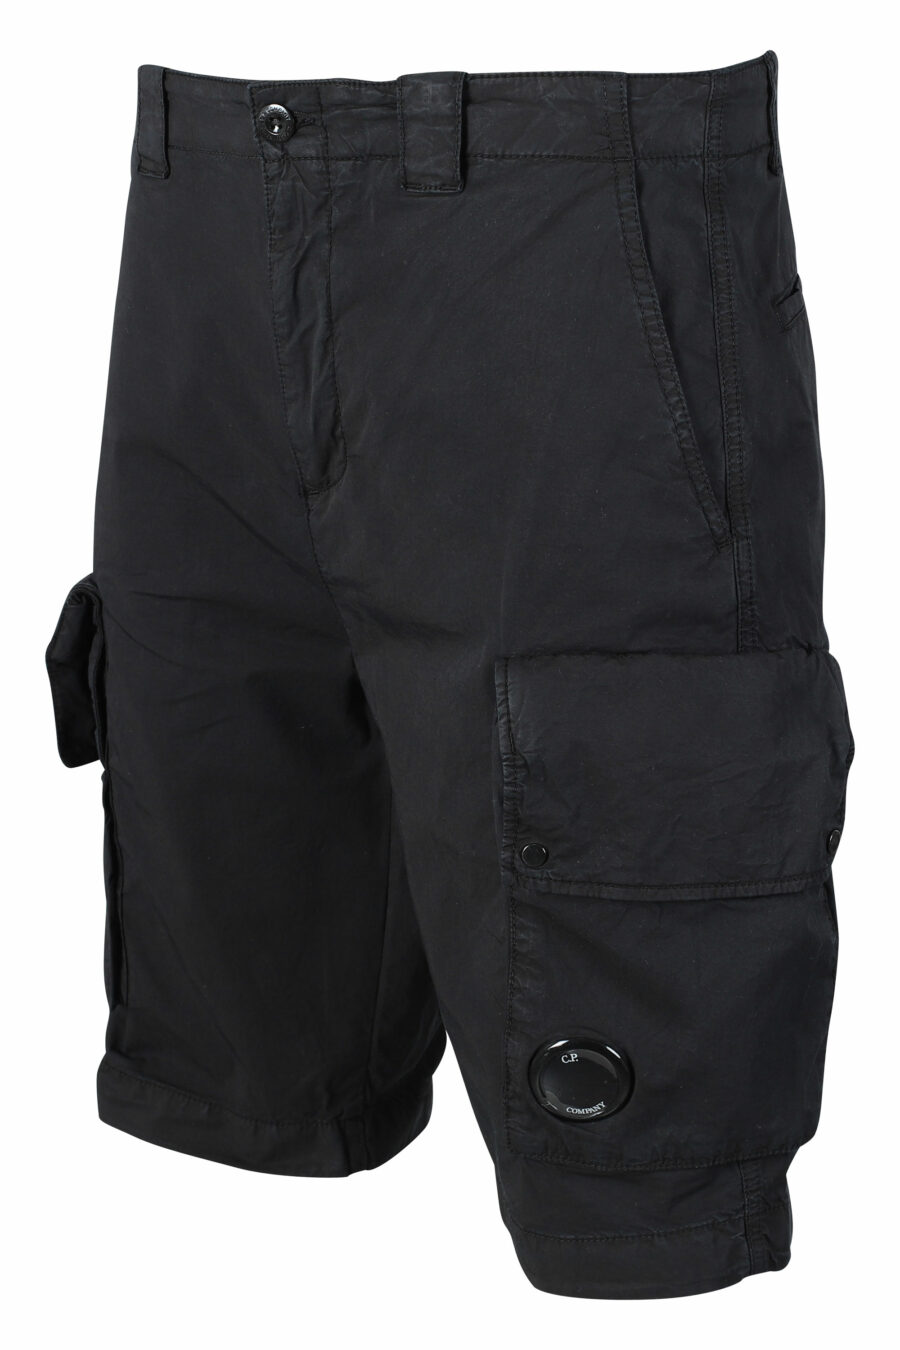 Pantalón corto negro con bolsillos laterales y minilogo circular - IMG 9483